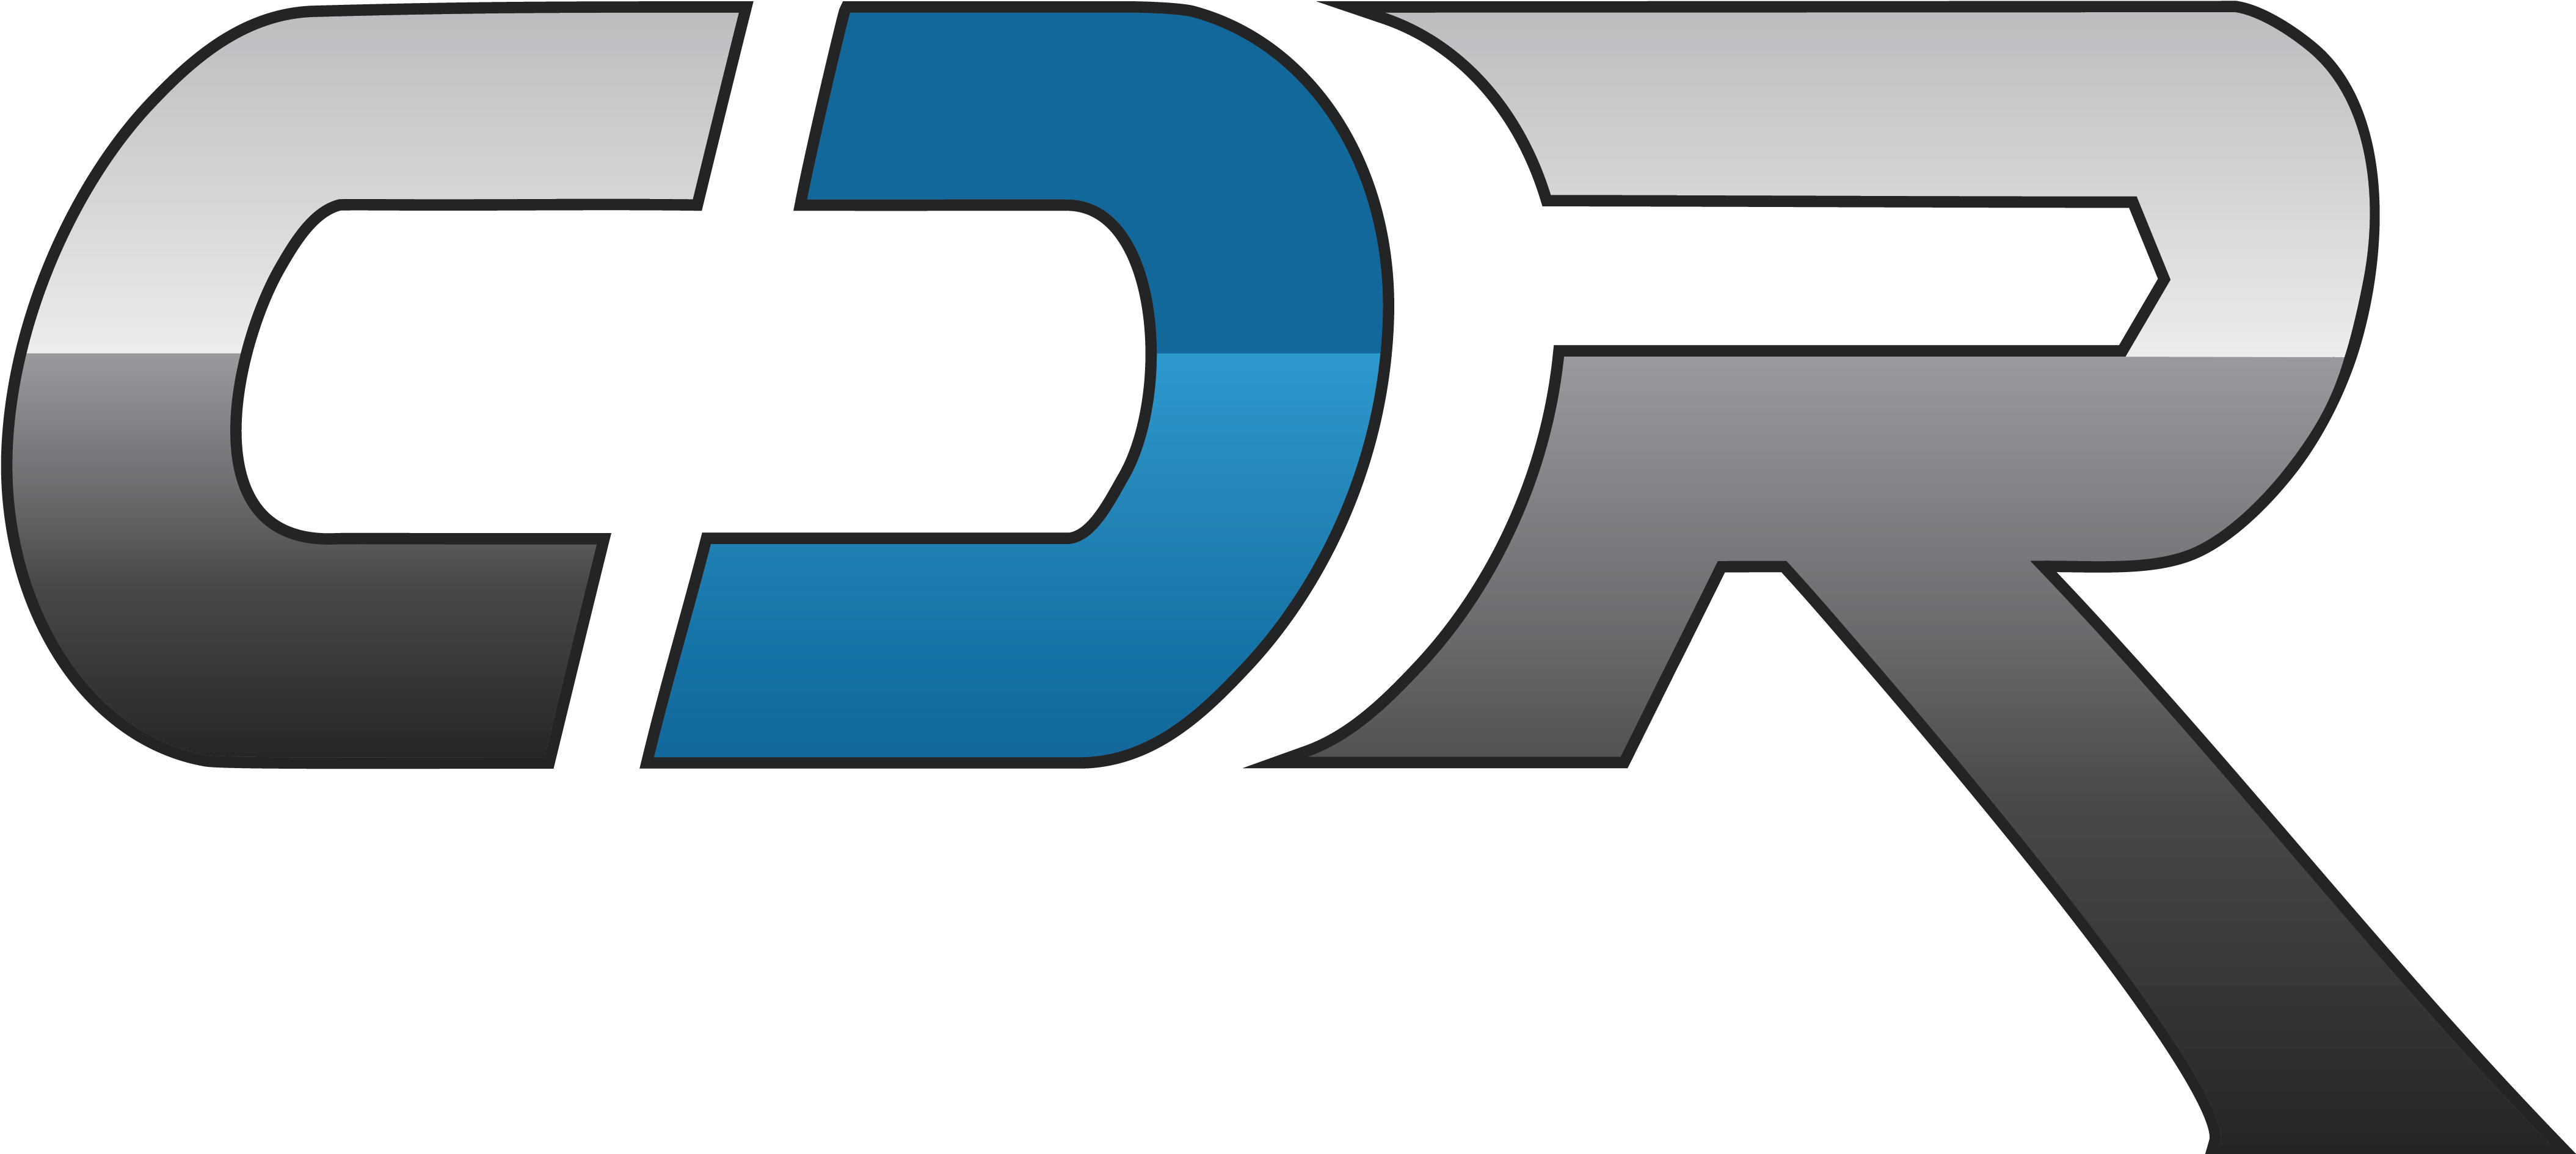 Logo Cdr - Logo Cd R Png (4961x1975), Png Download